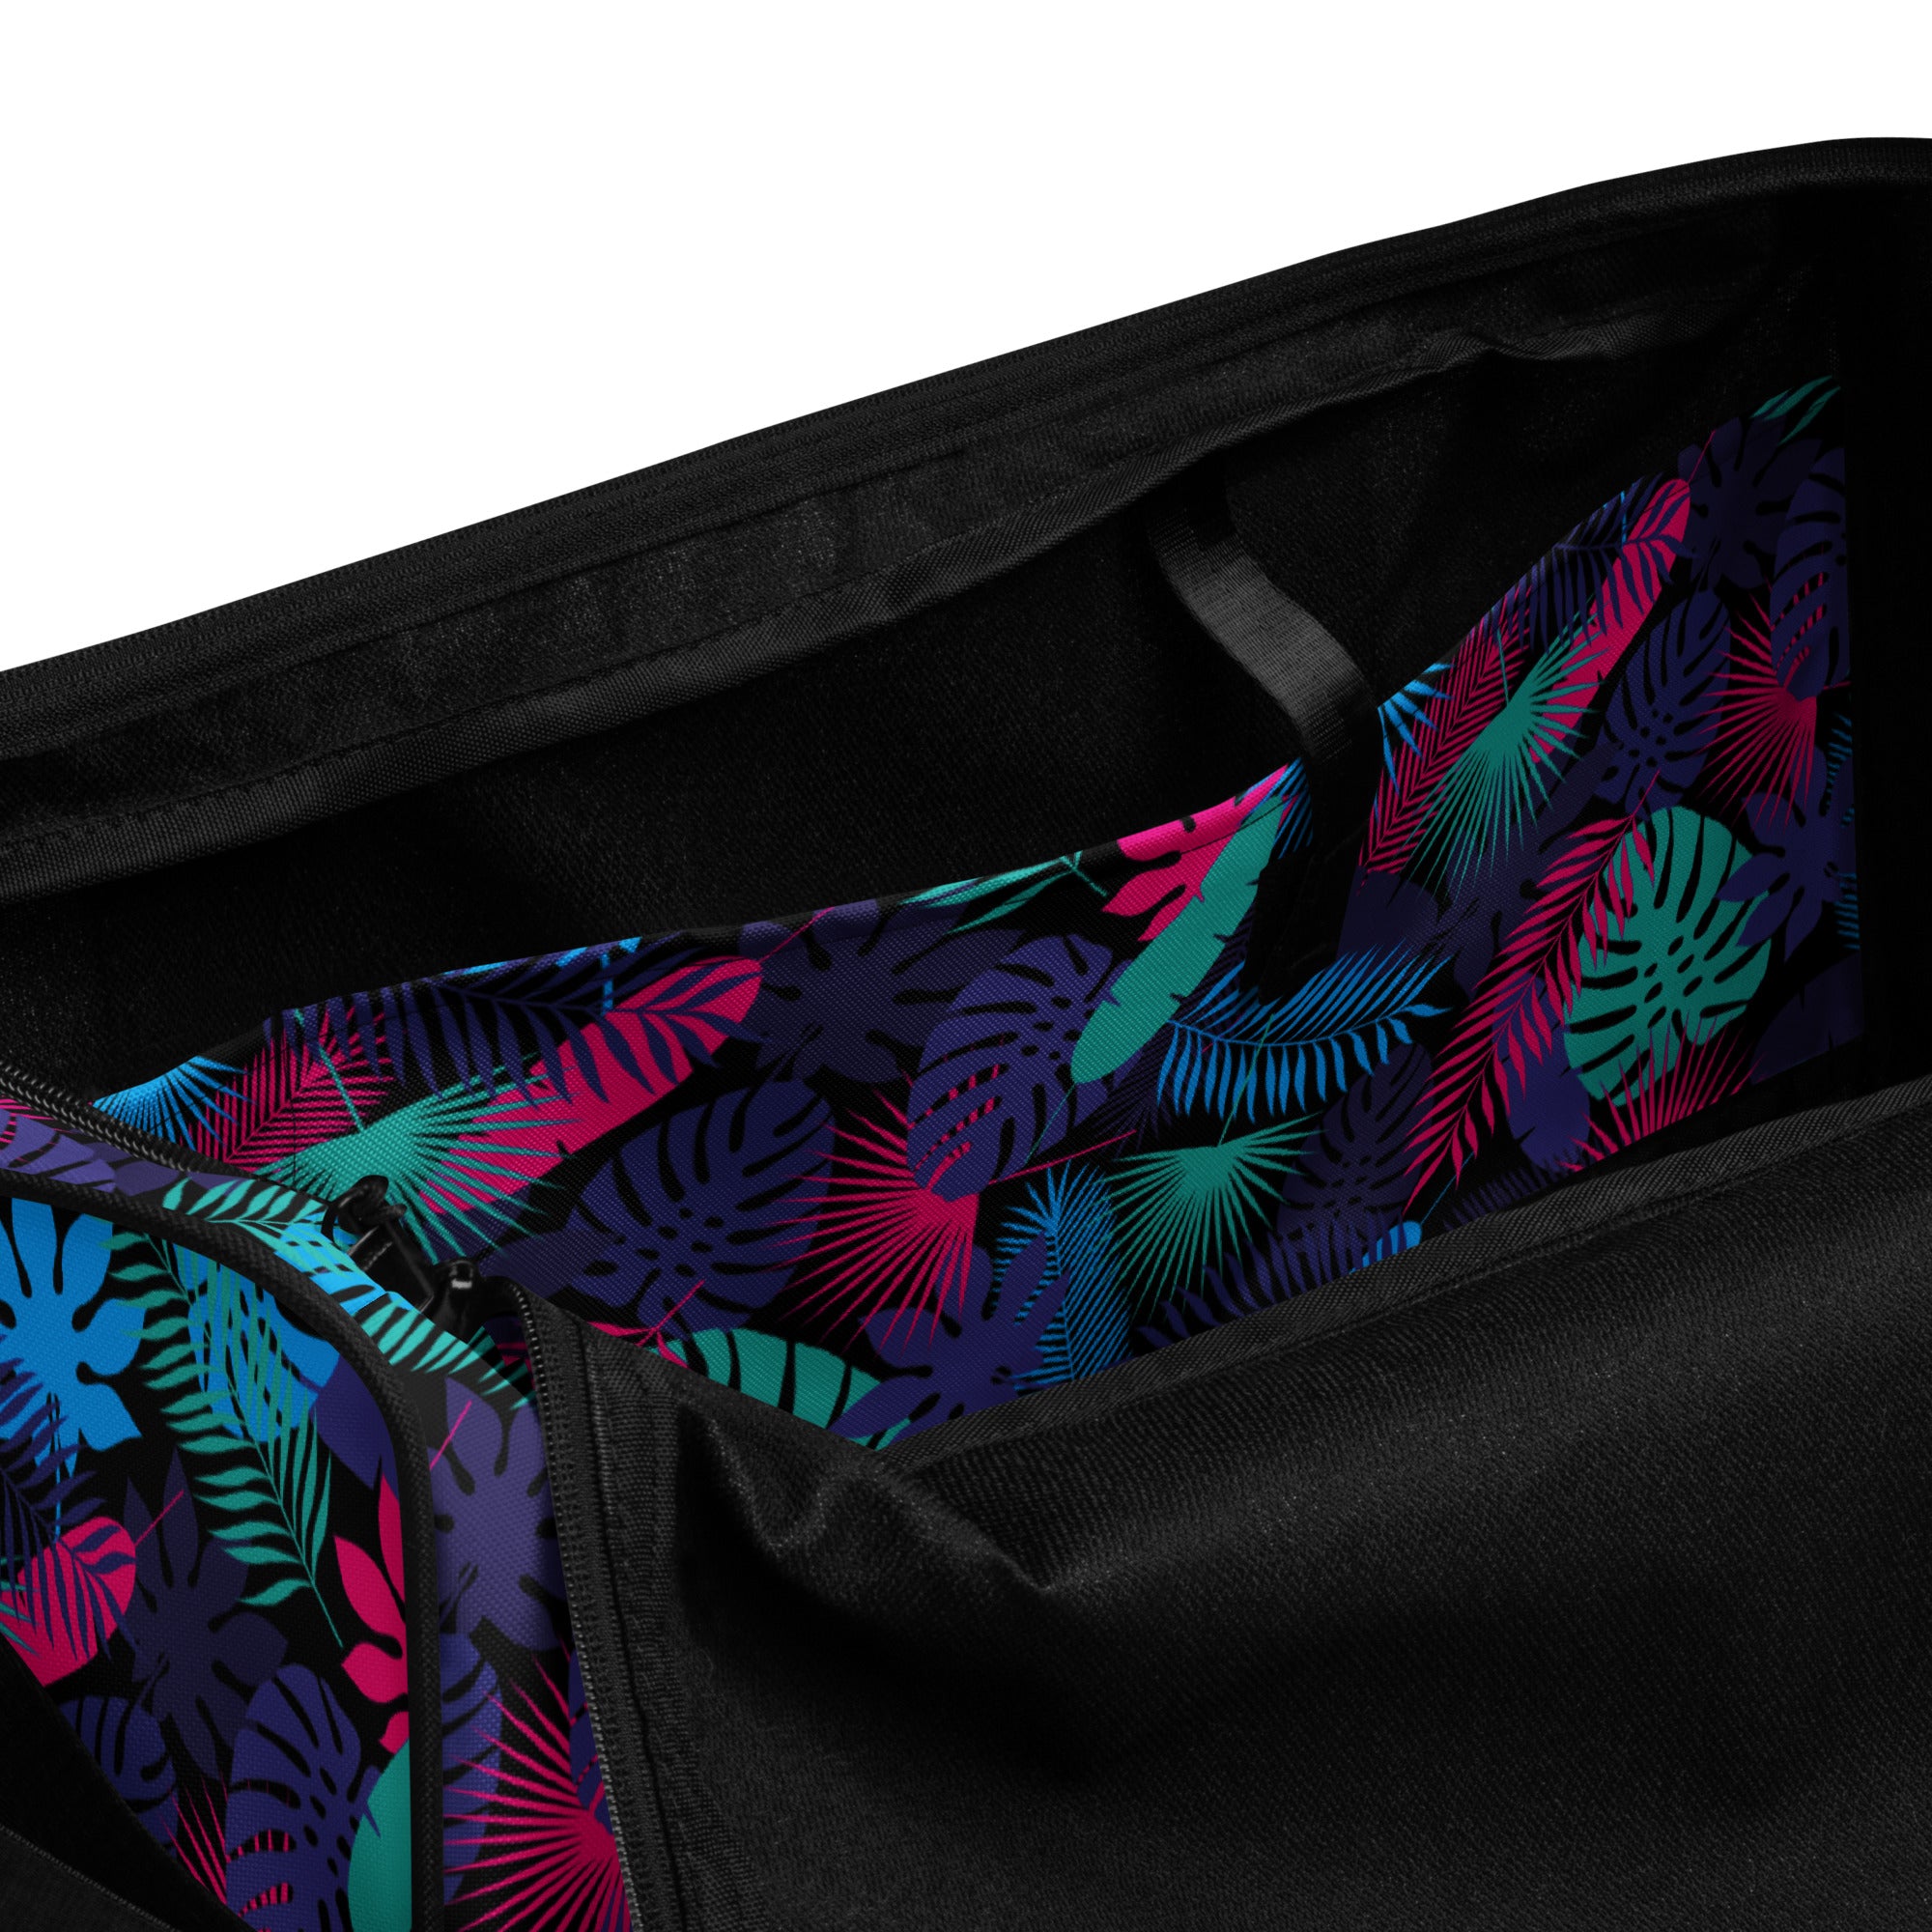 Neon Jungle Duffle Bag